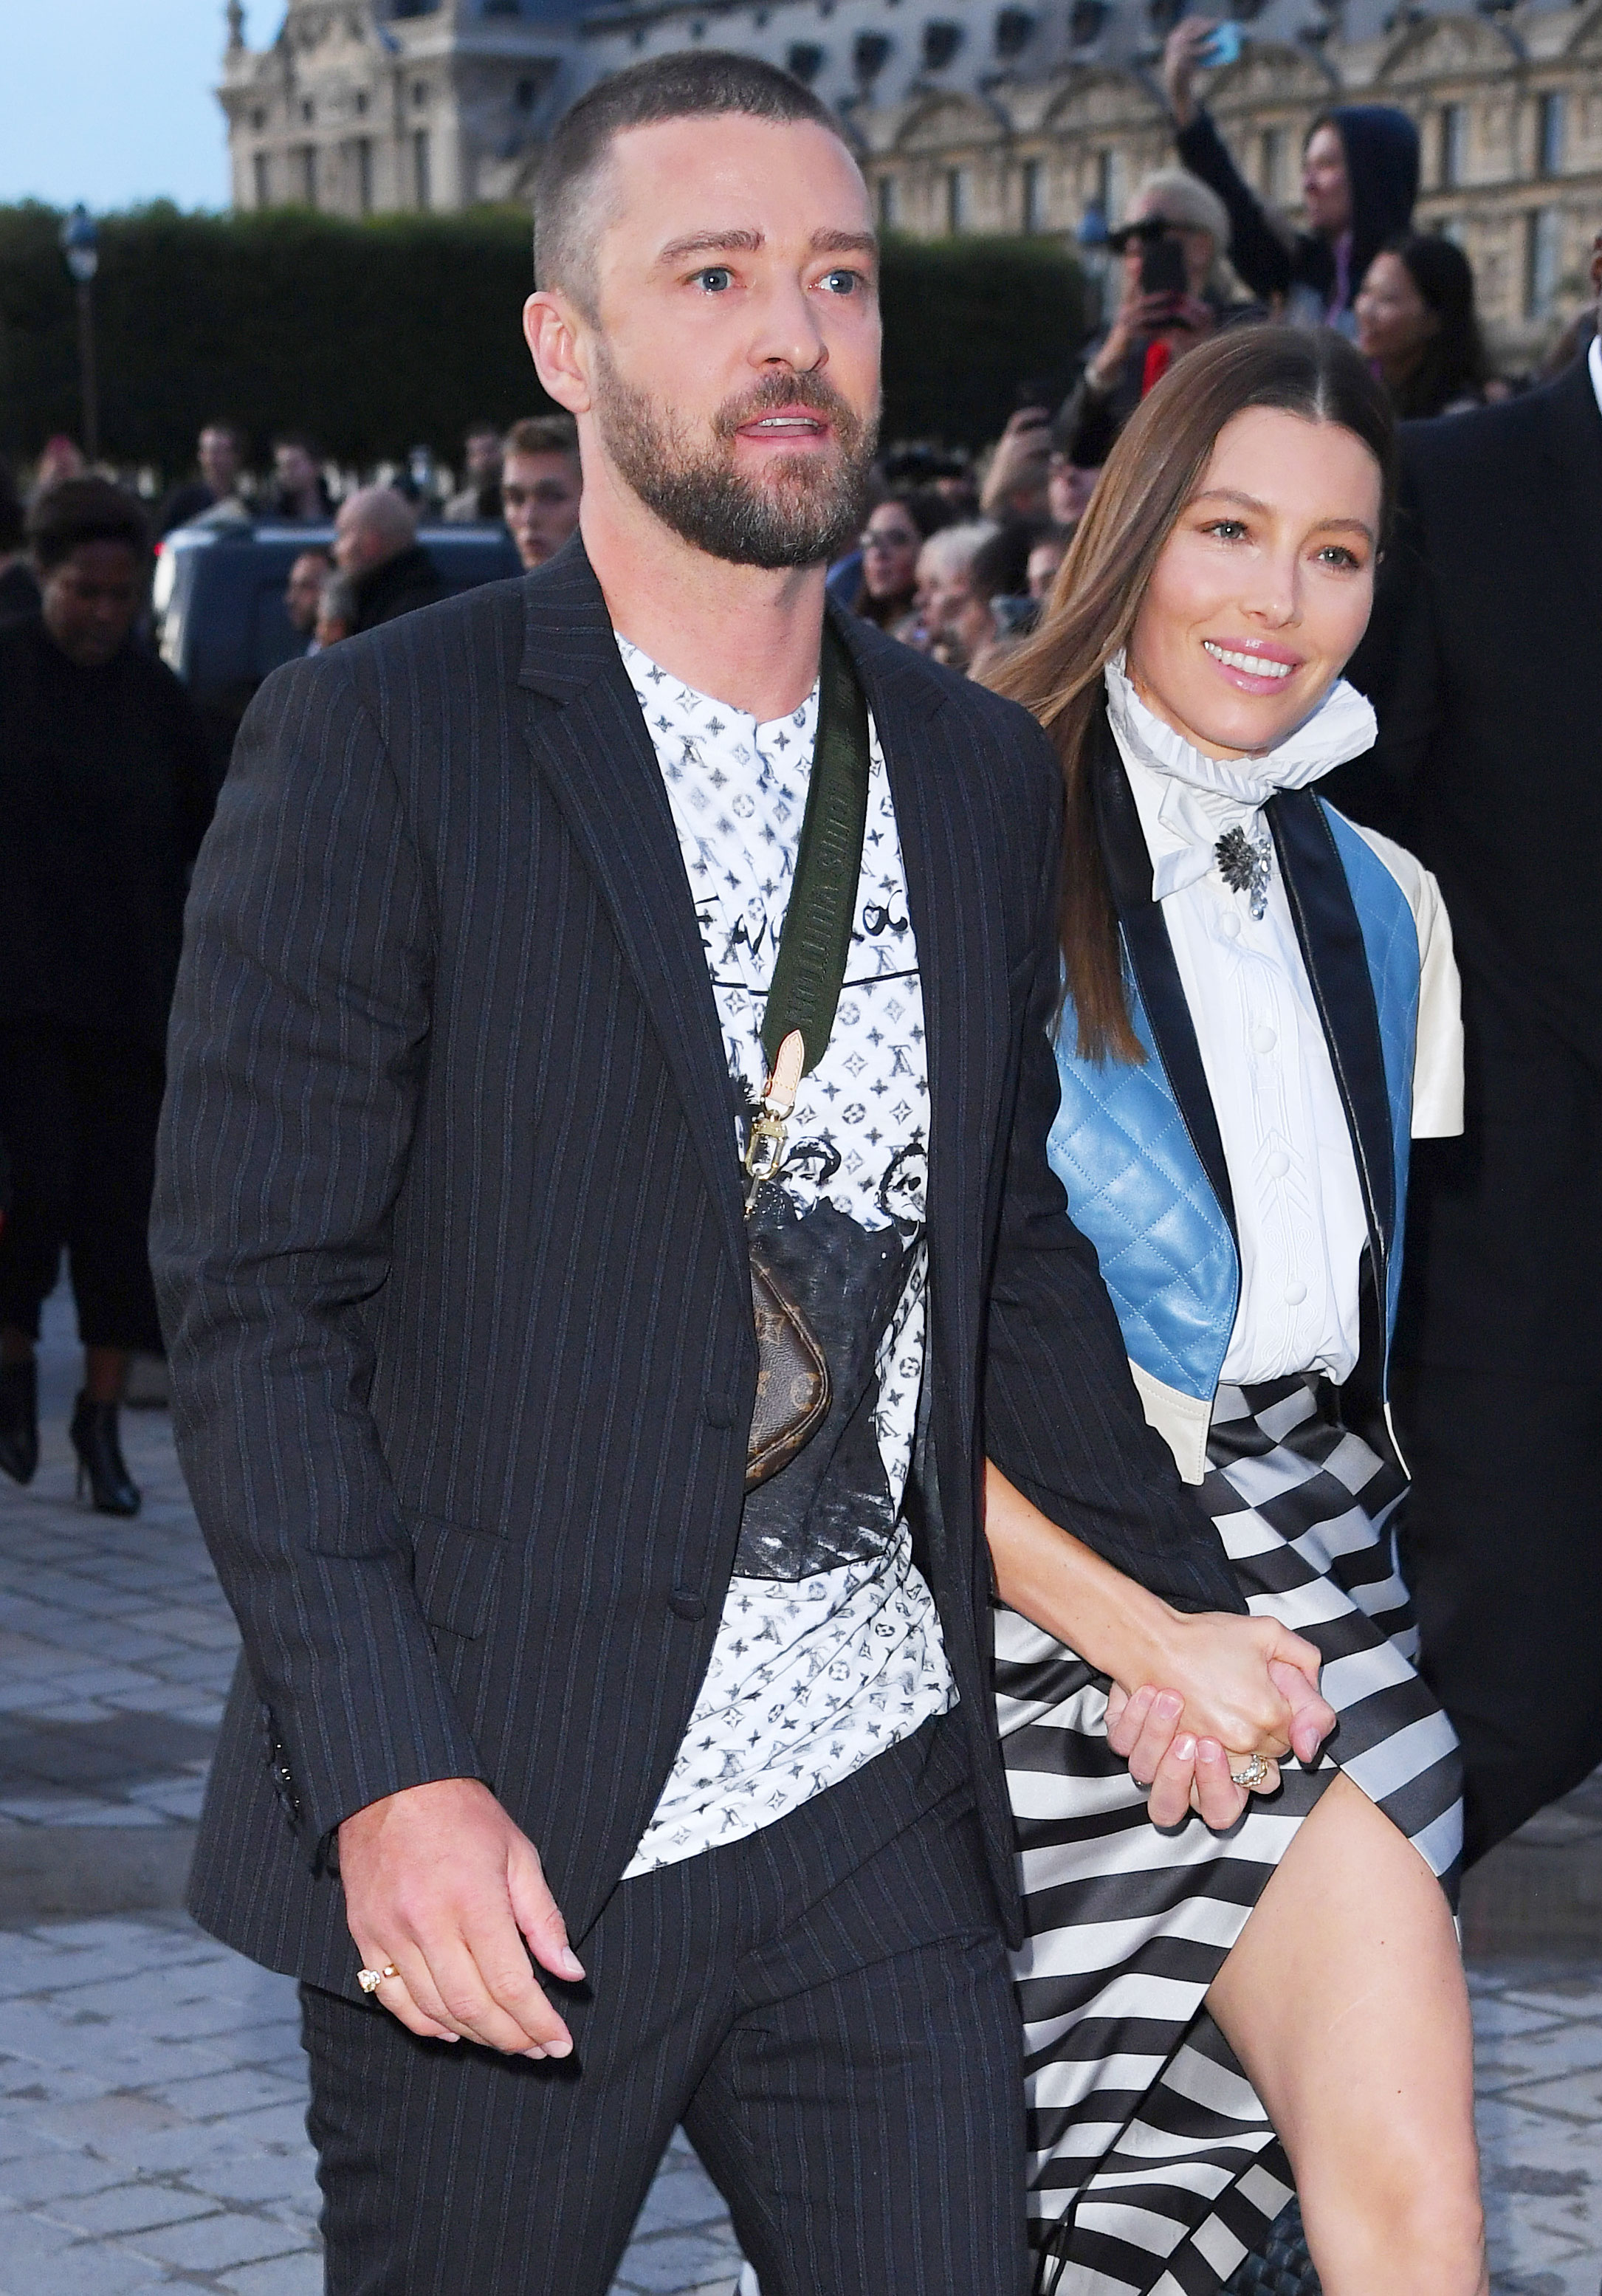 Justin Timberlake ambushed outside show at Paris Fashion Week